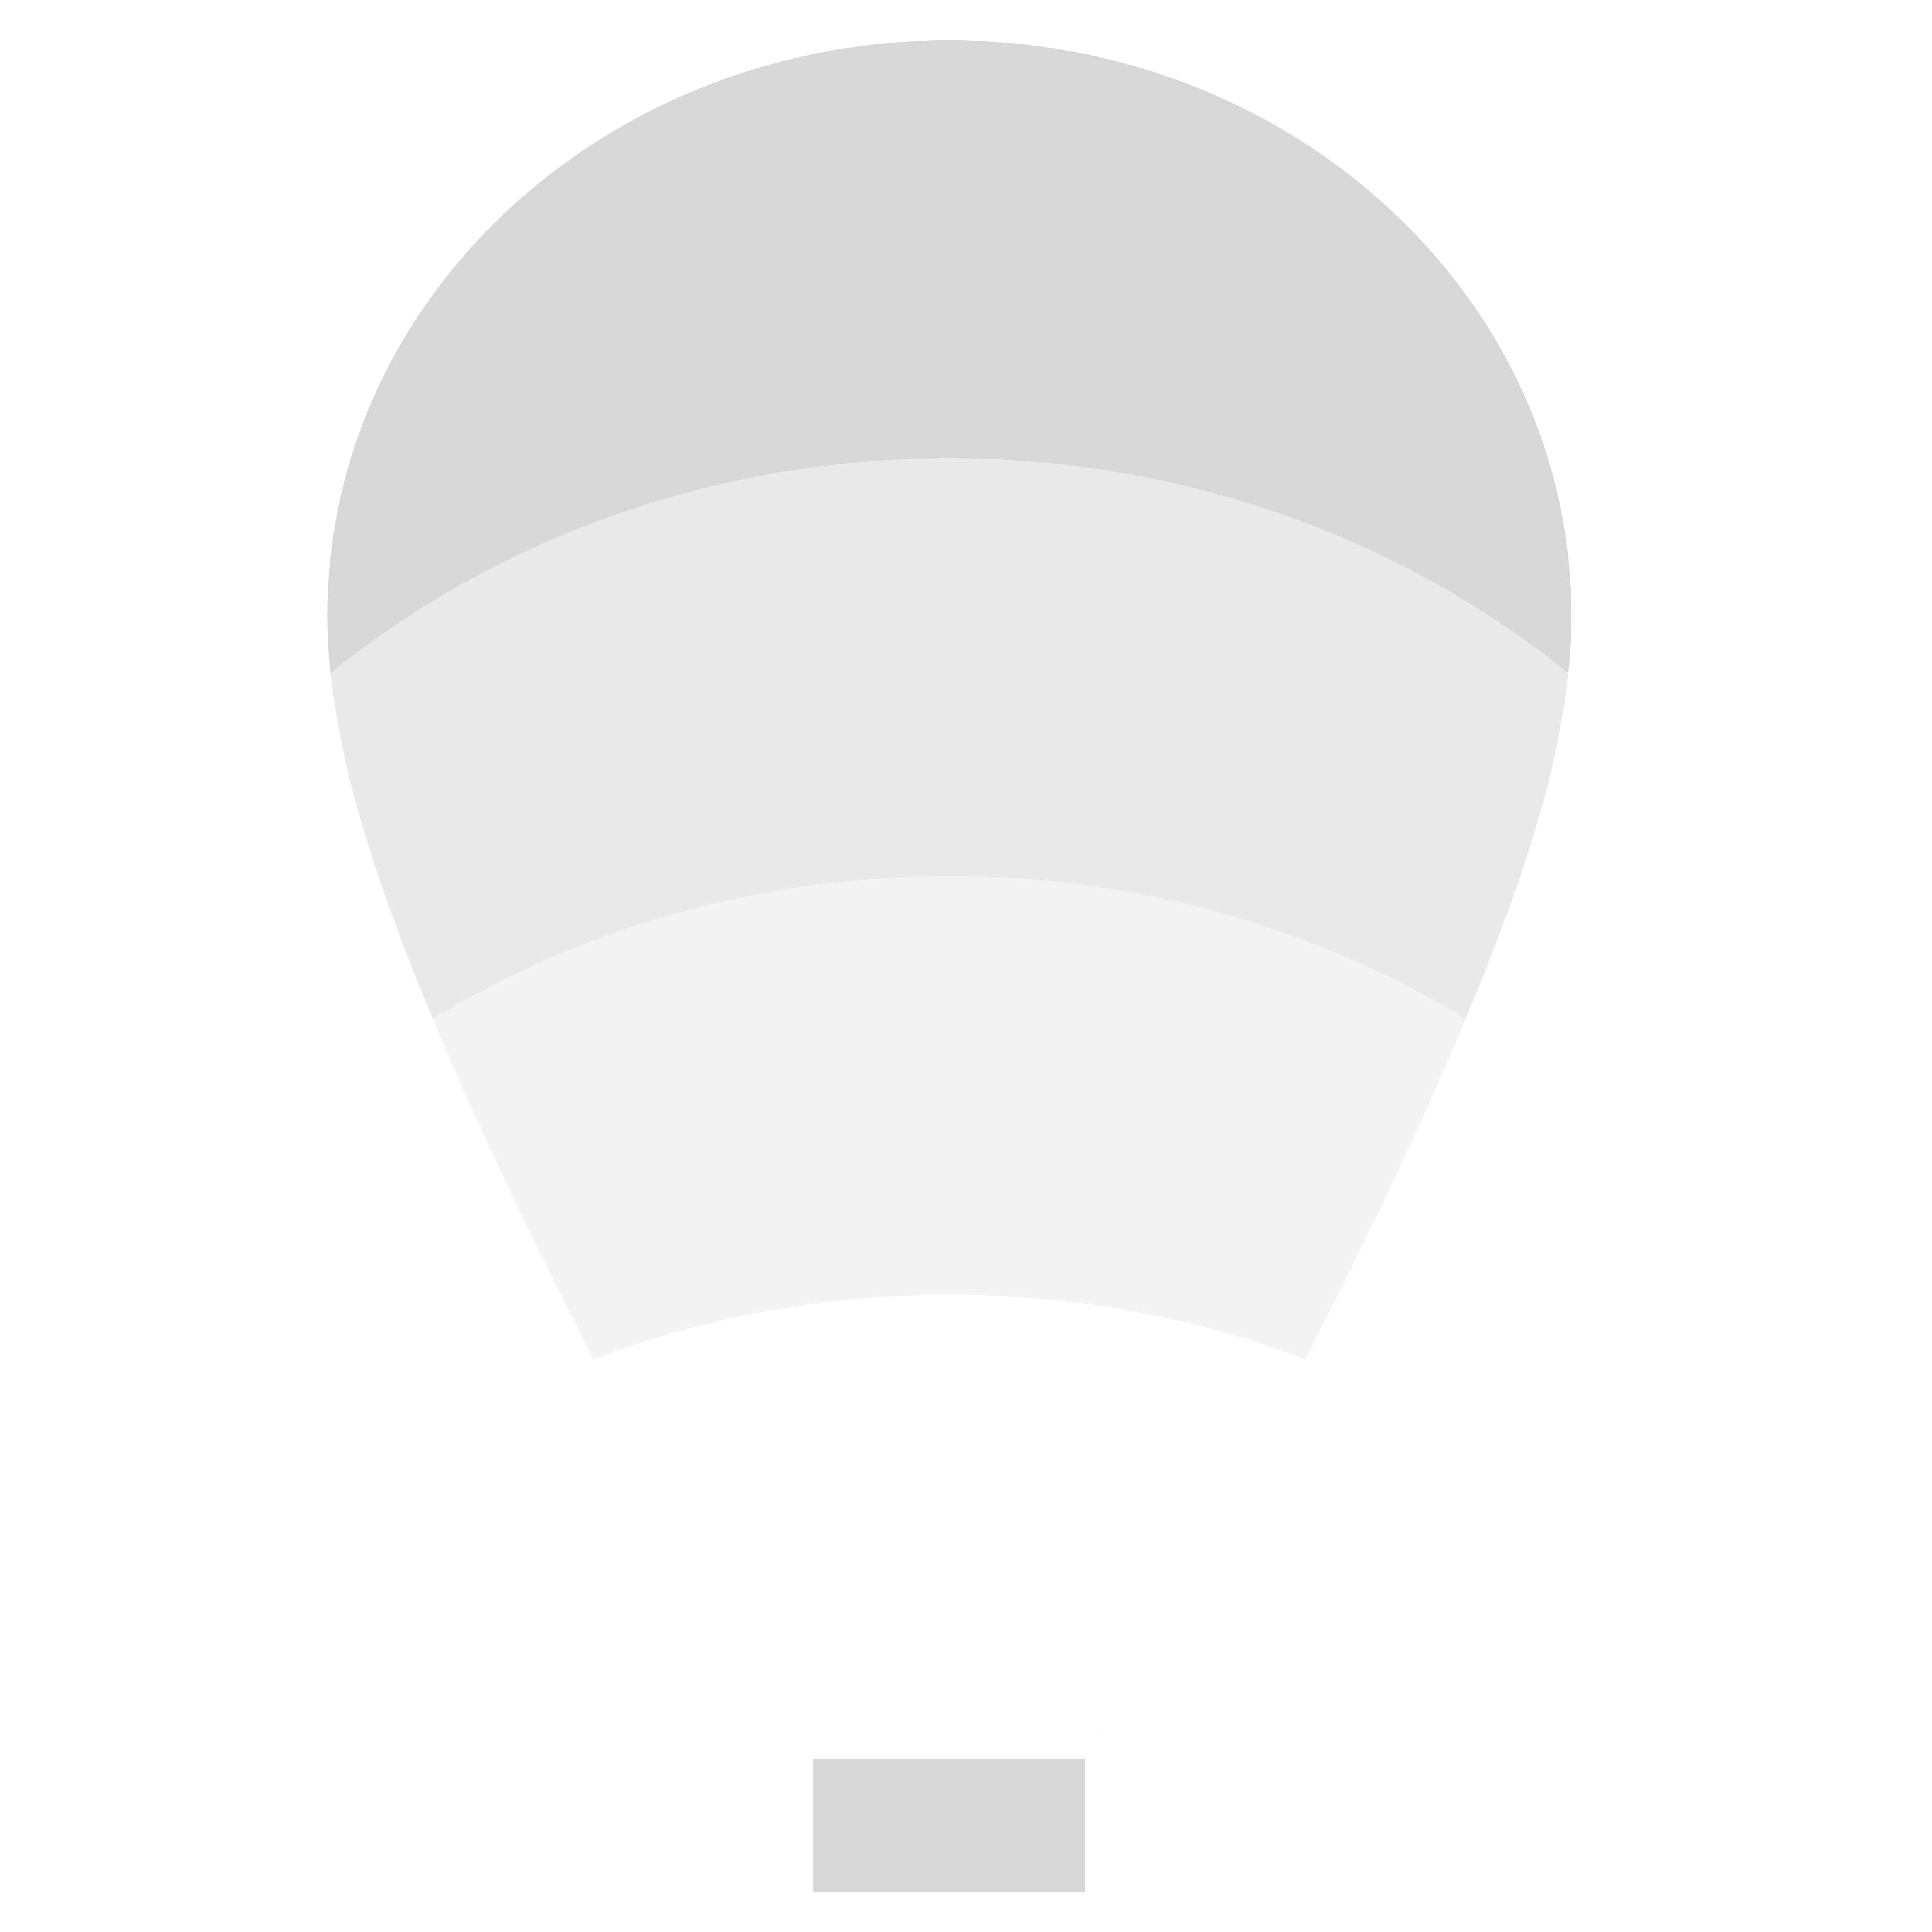 Illustration of a white lantern